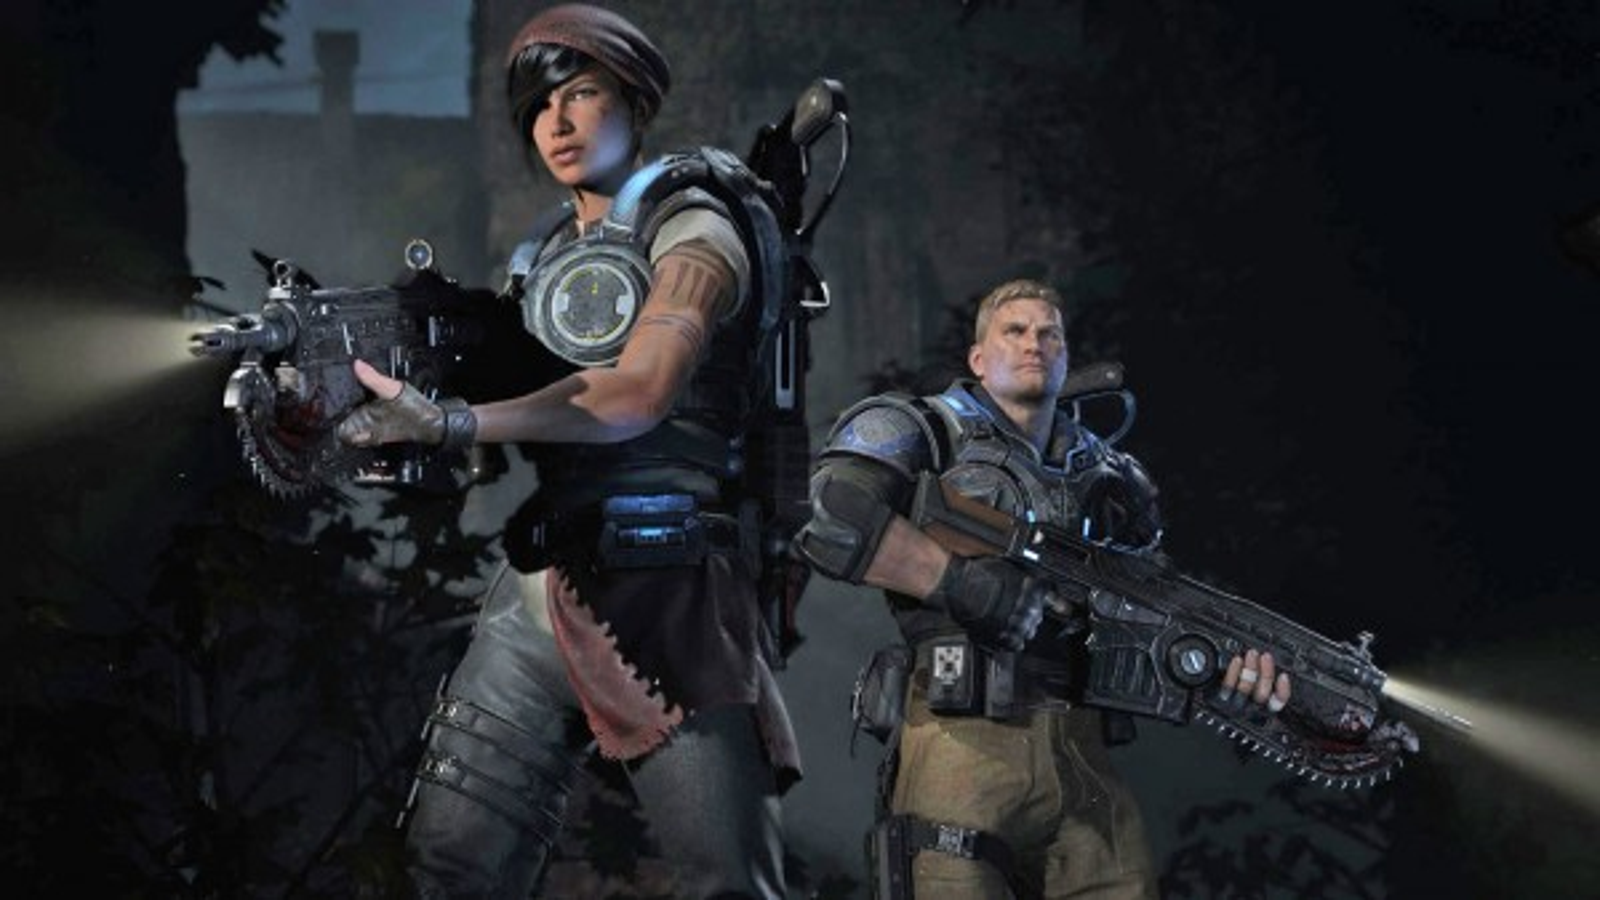 Gears of War 5 - PC Gameplay (1080p60fps) 